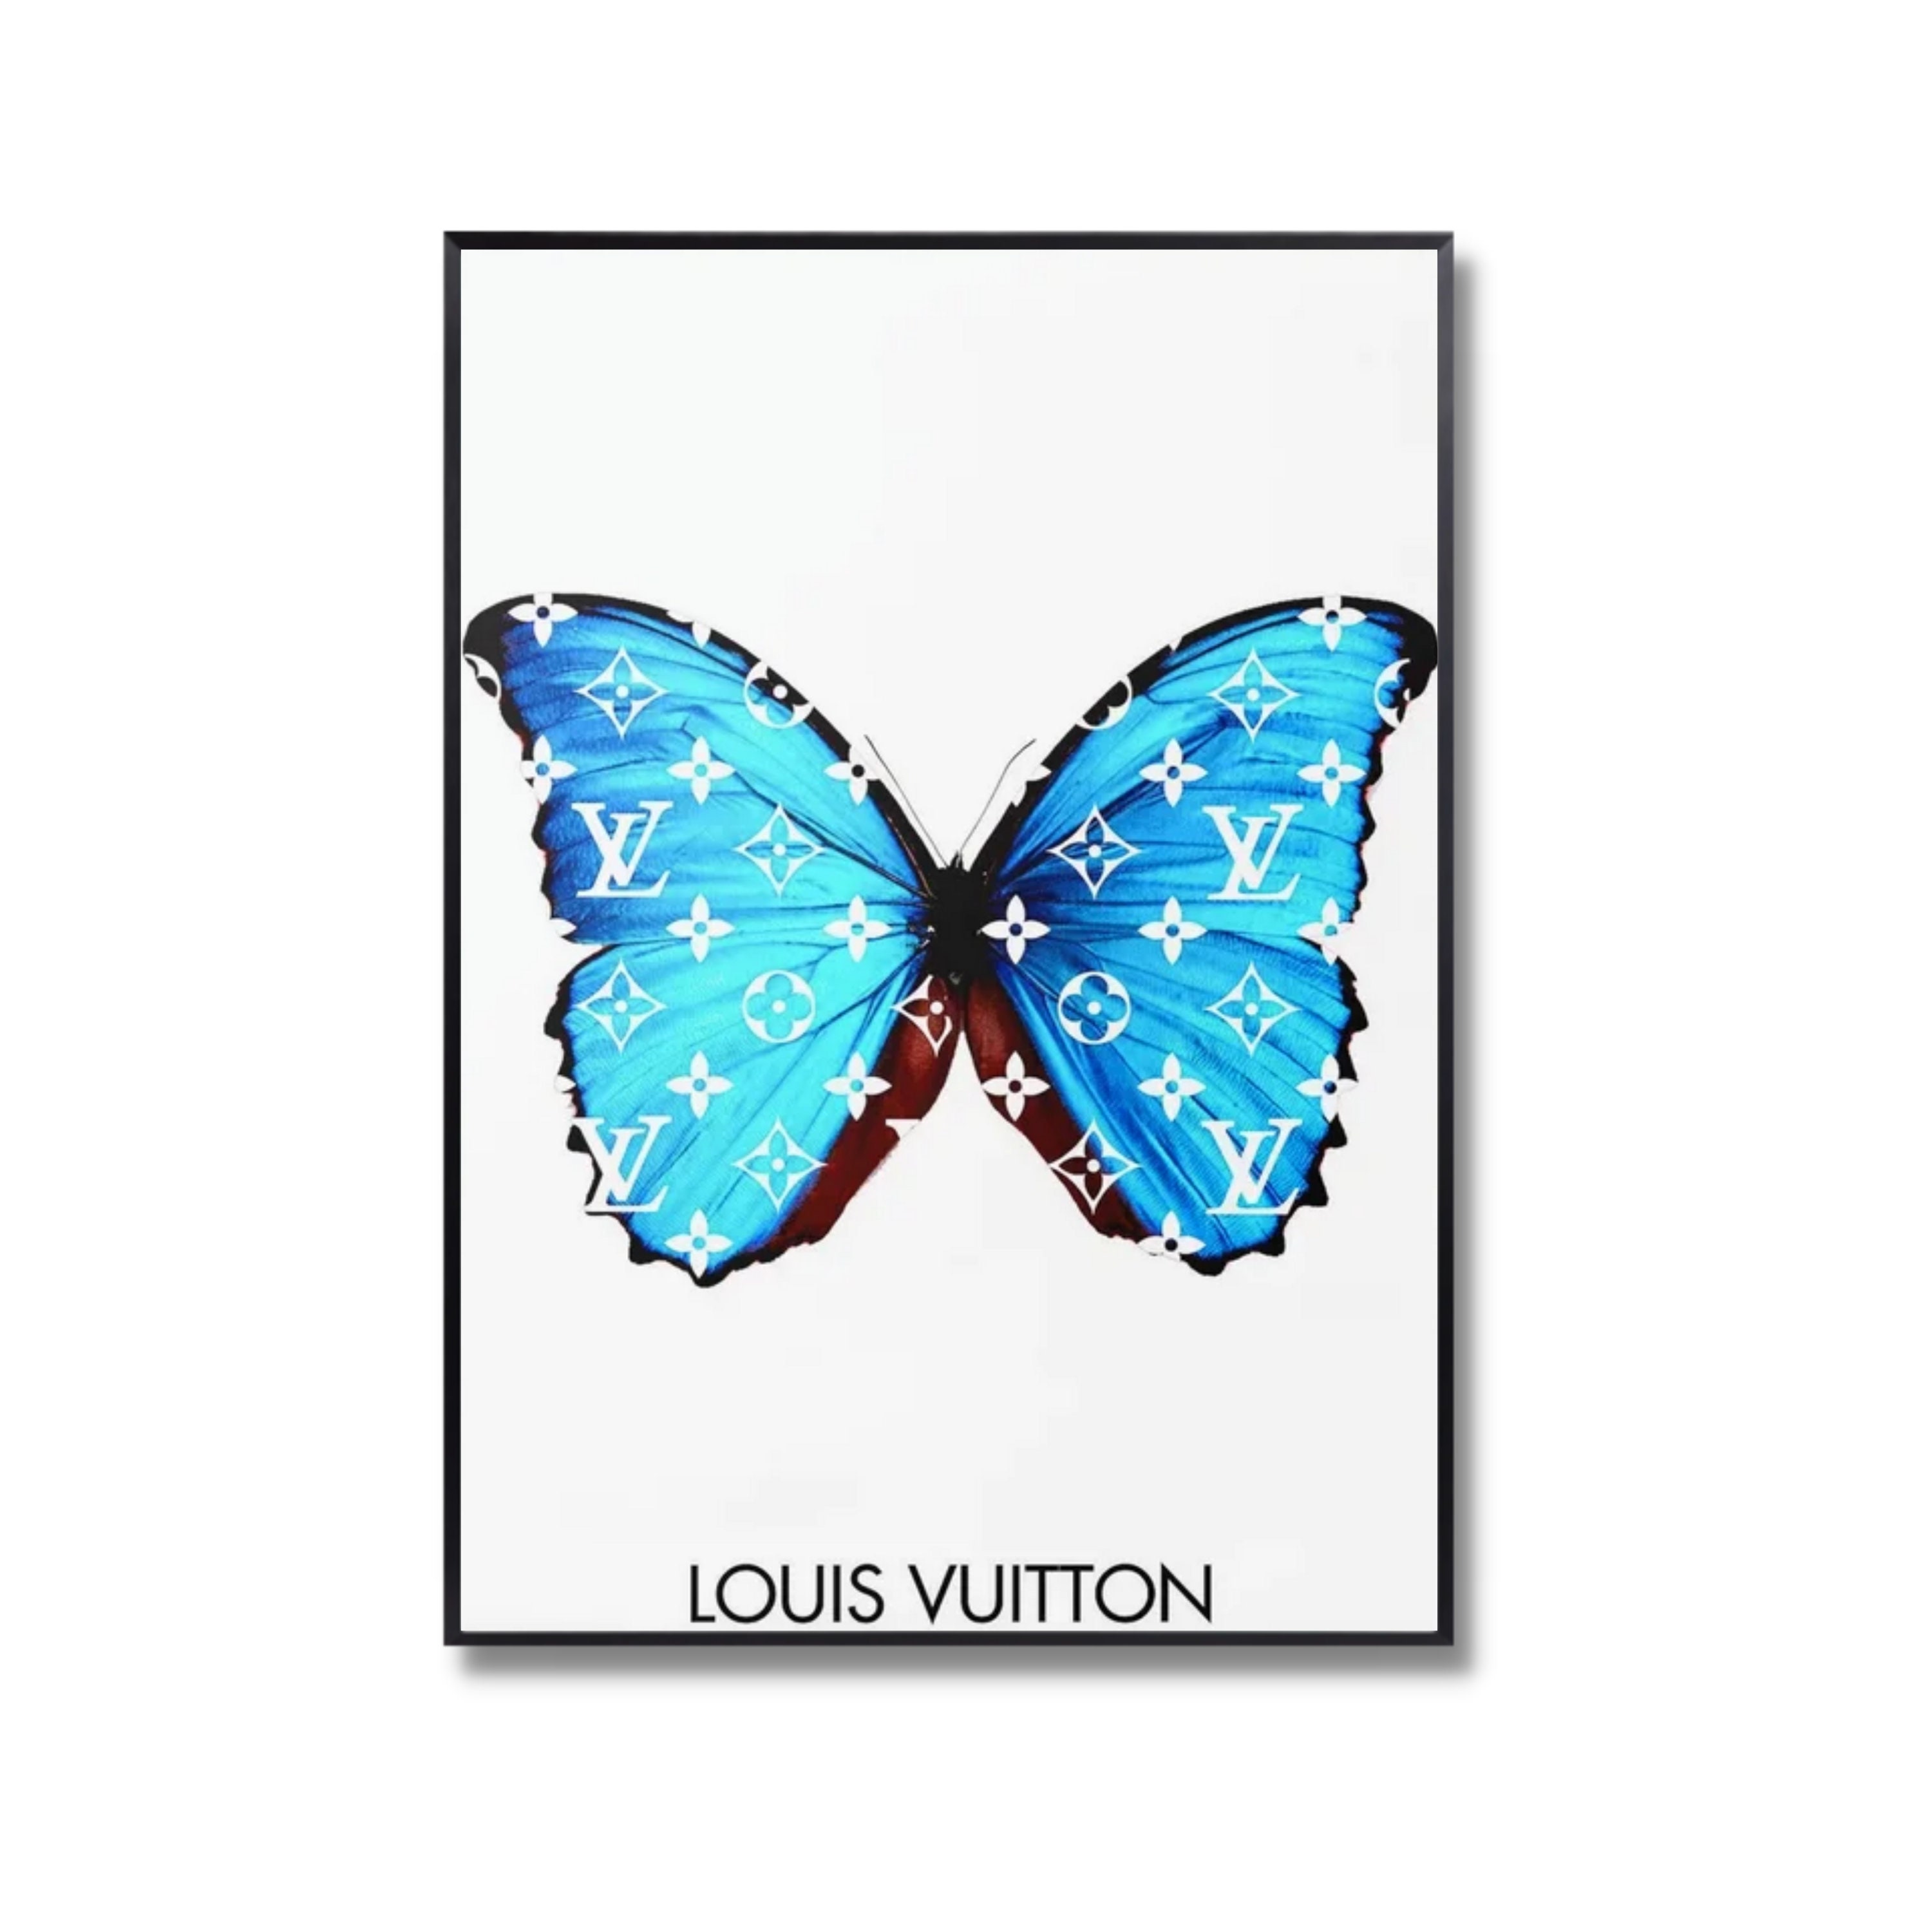 Louis Vuitton Poster Print Luxury Fashion Branded Wall Art 